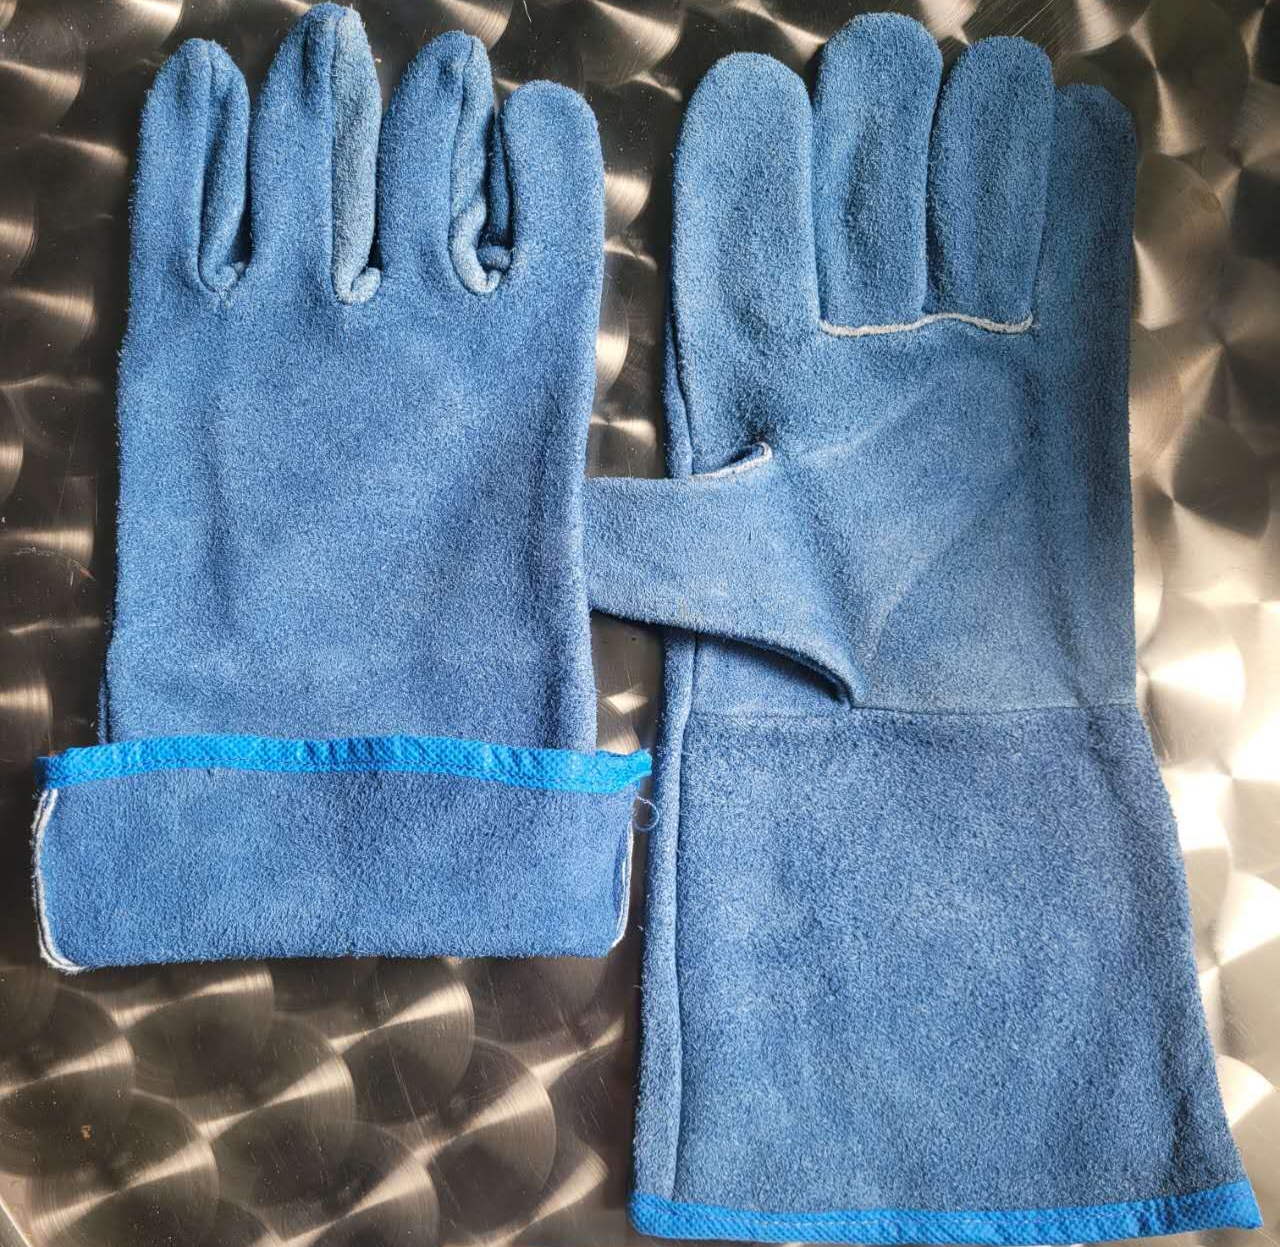 split leather safety working gloves